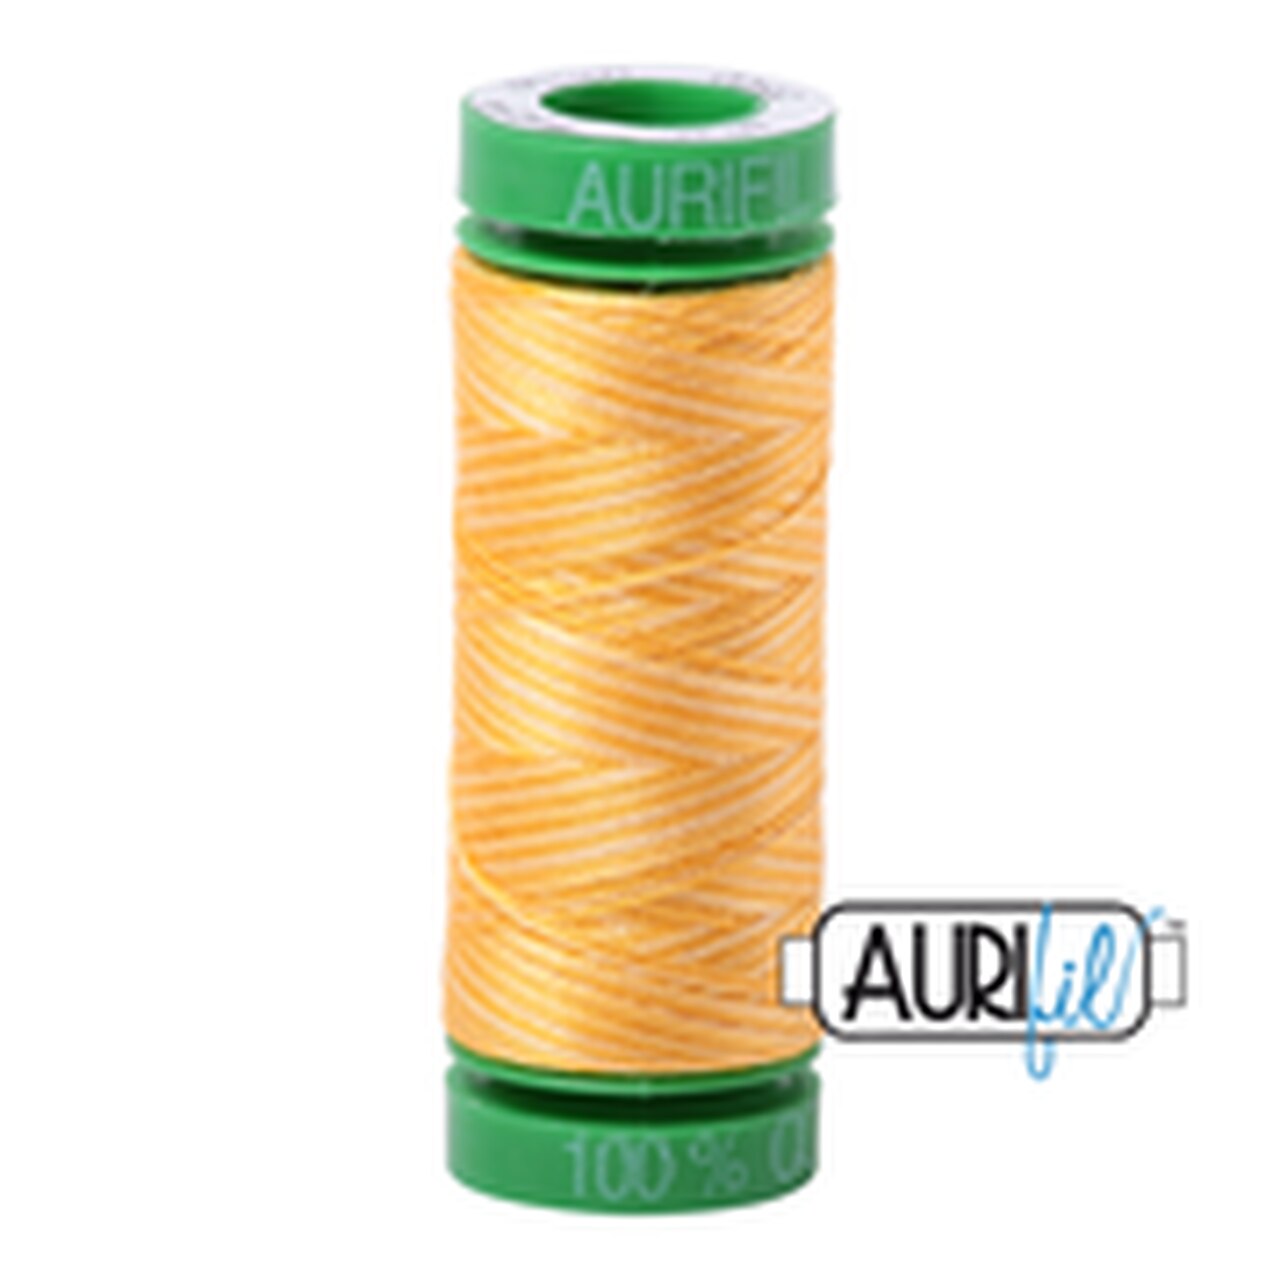 Aurifil (40wt) Cotton Thread Varigated